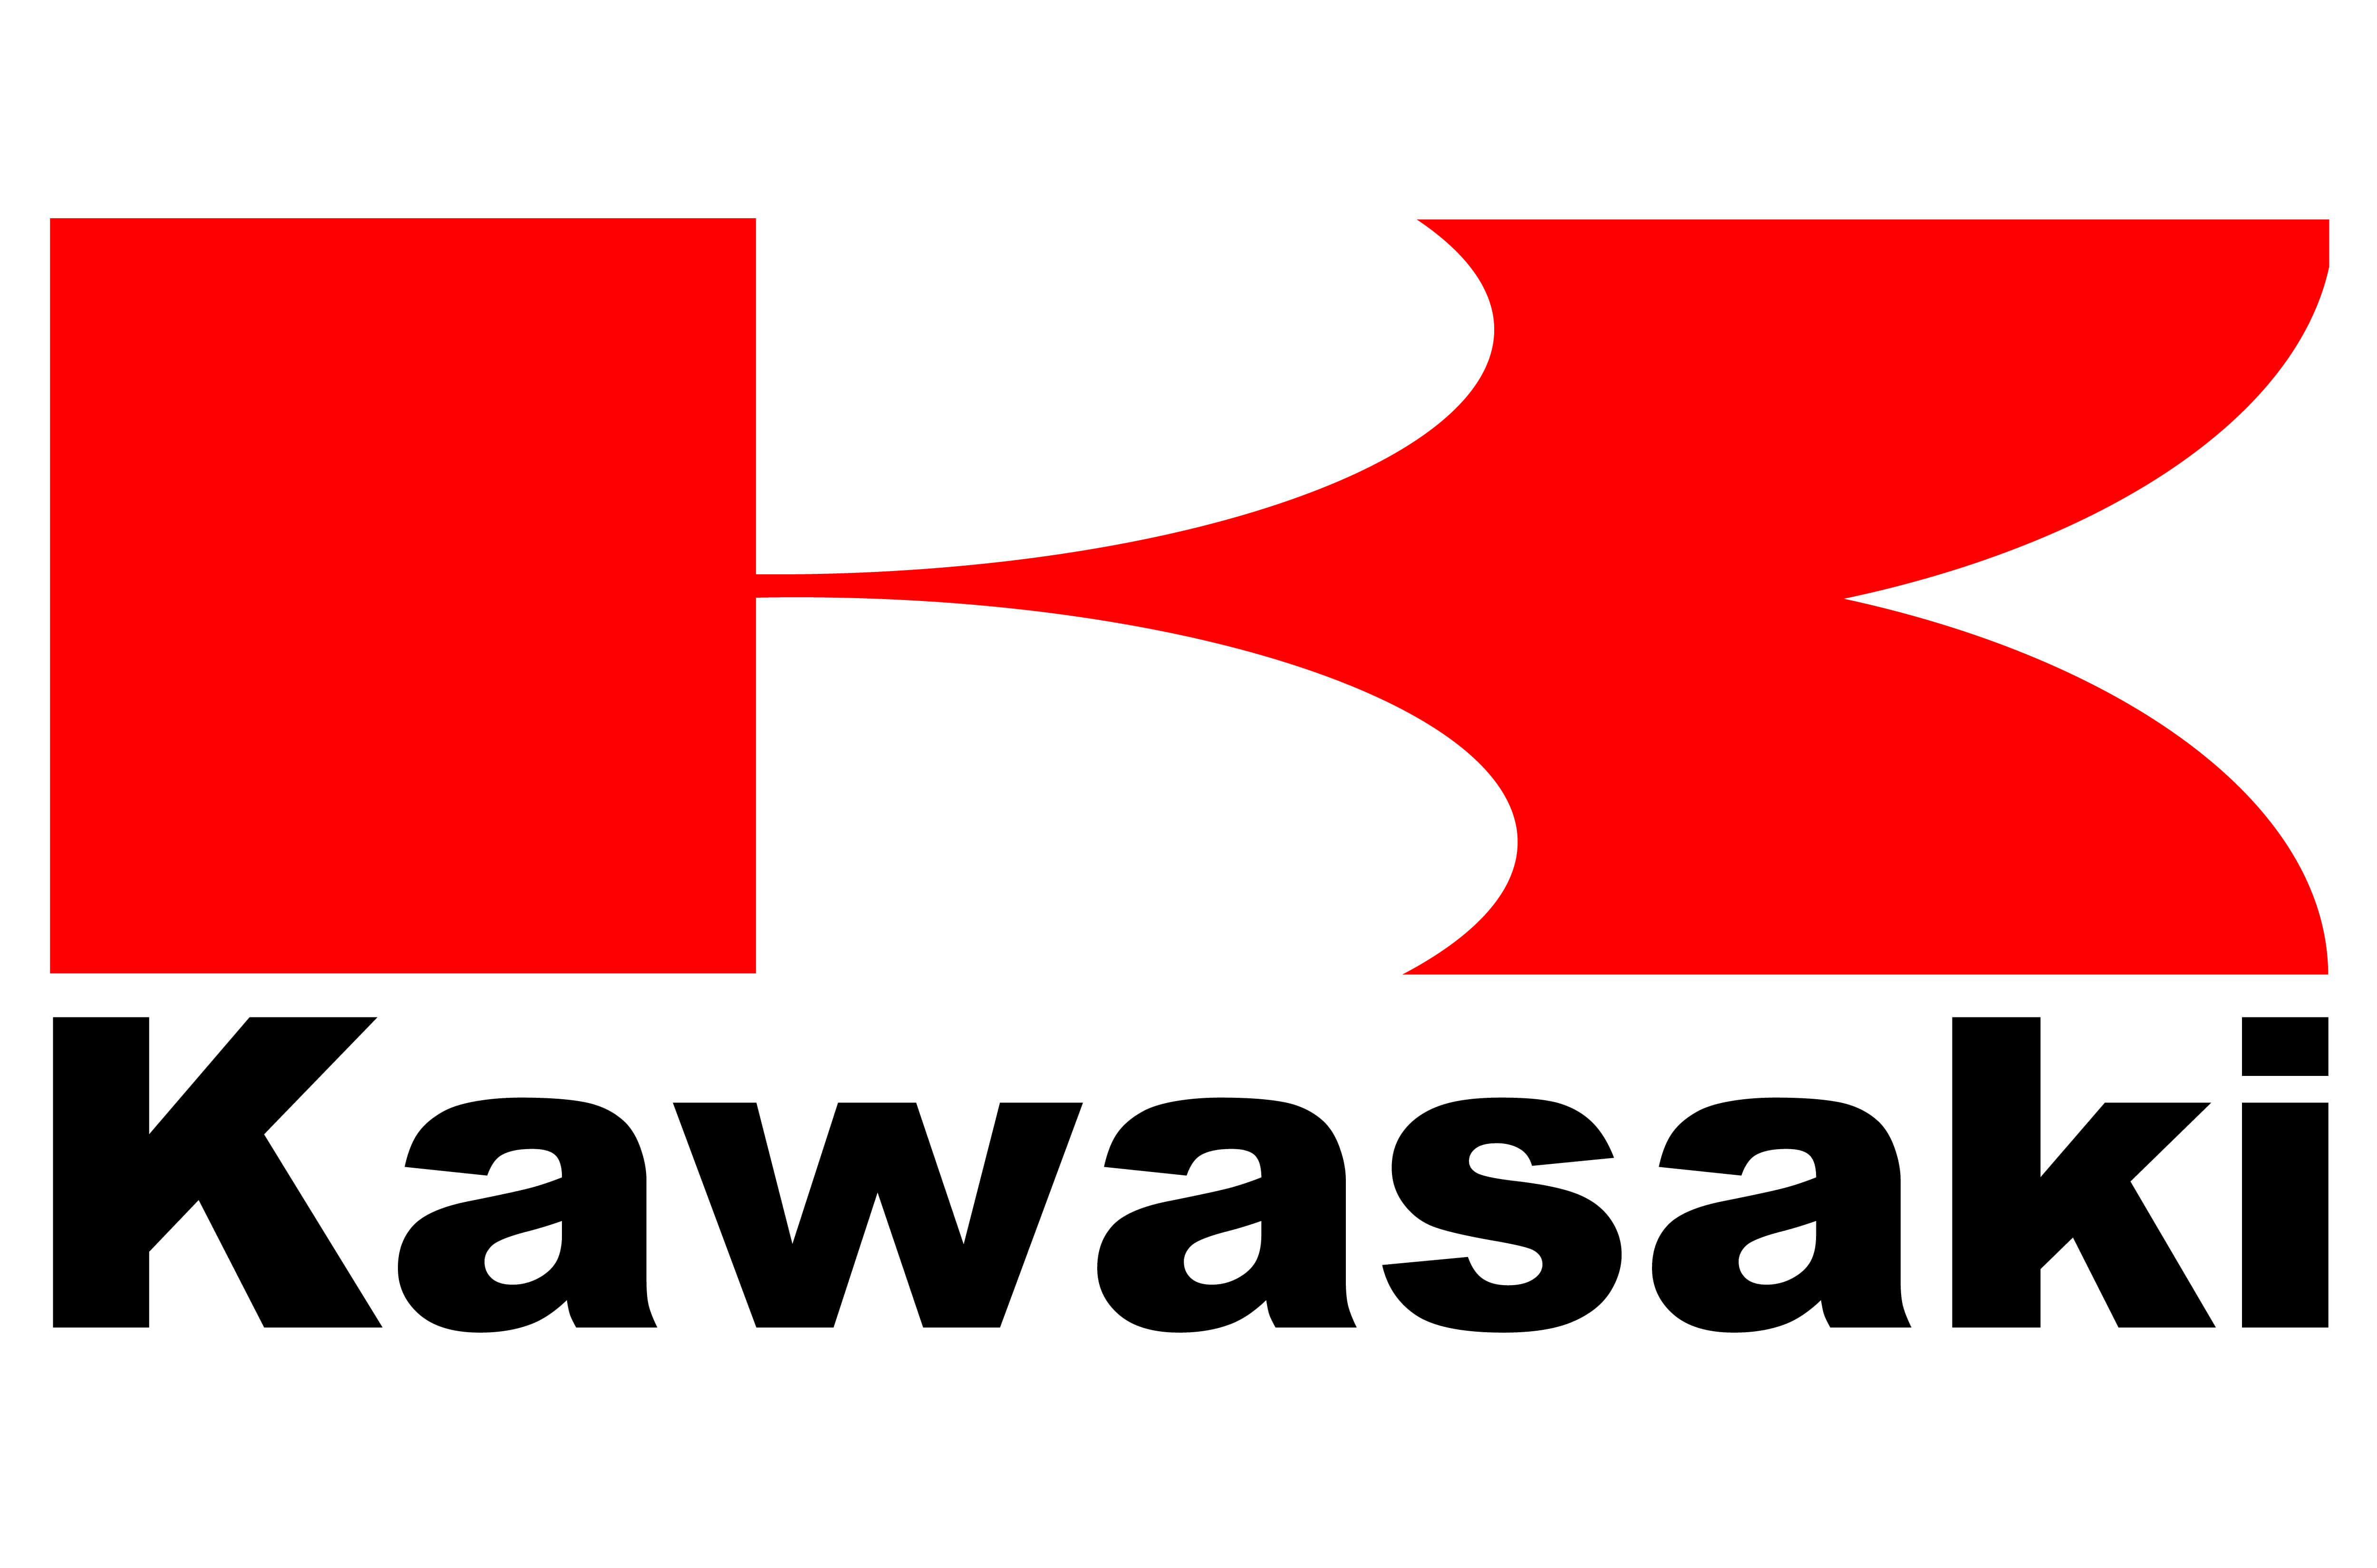 Red Black and White Logo - Kawasaki logo